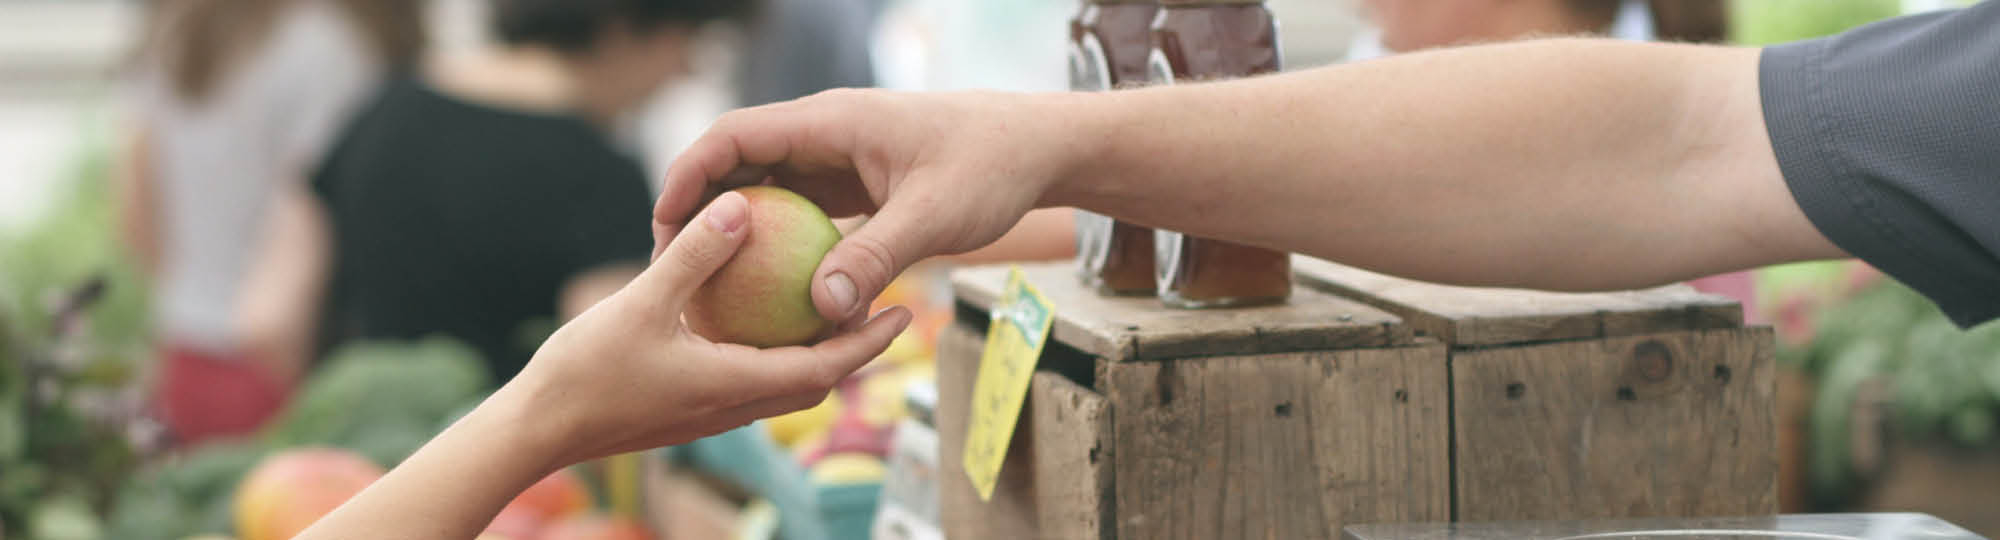 An adult handing an apple to a child